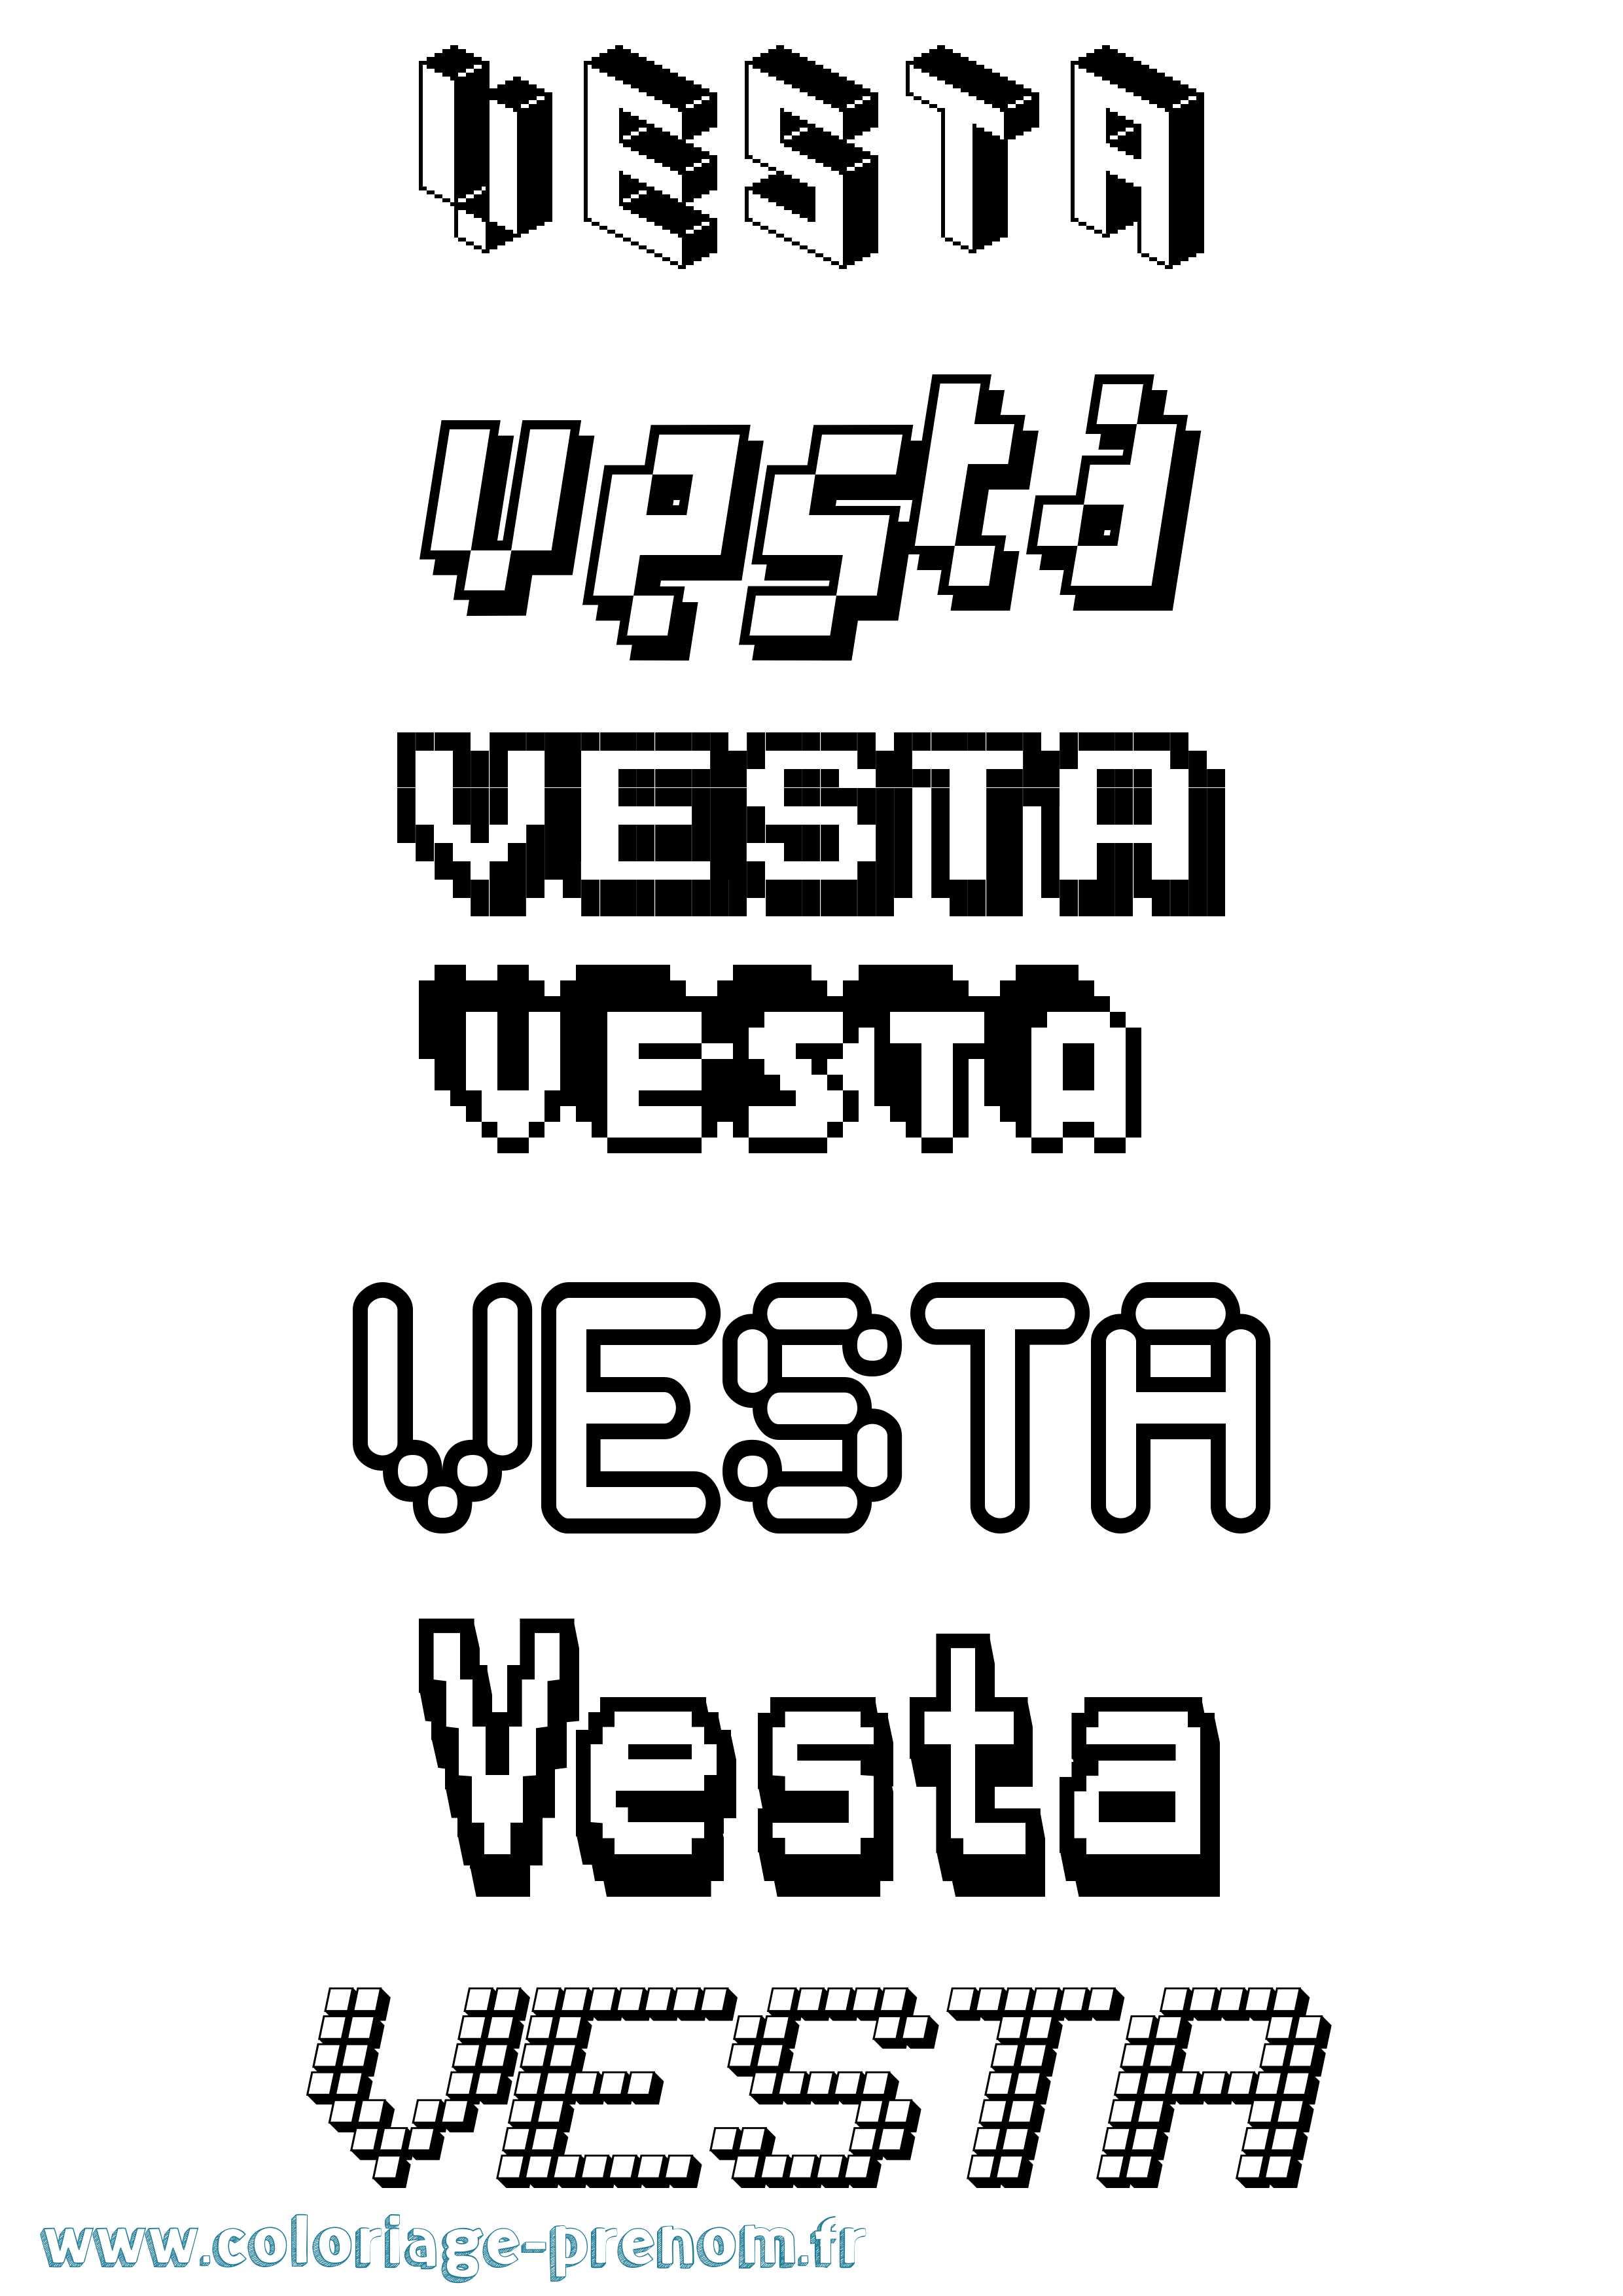 Coloriage prénom Vesta Pixel